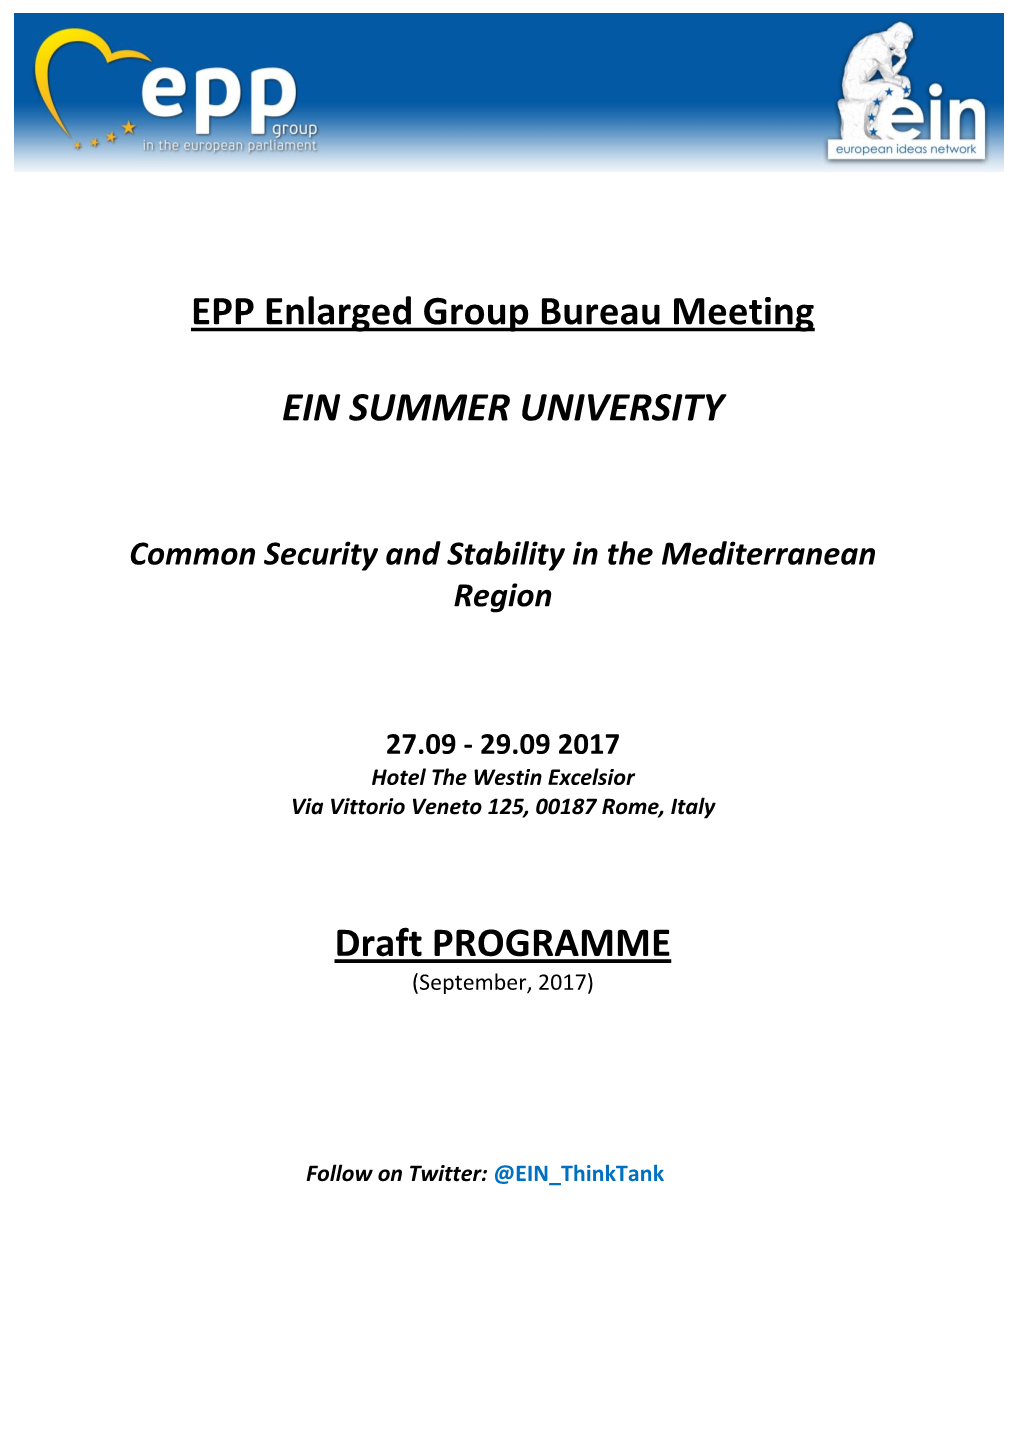 EPP Enlarged Group Bureau Meeting EIN SUMMER UNIVERSITY Draft PROGRAMME